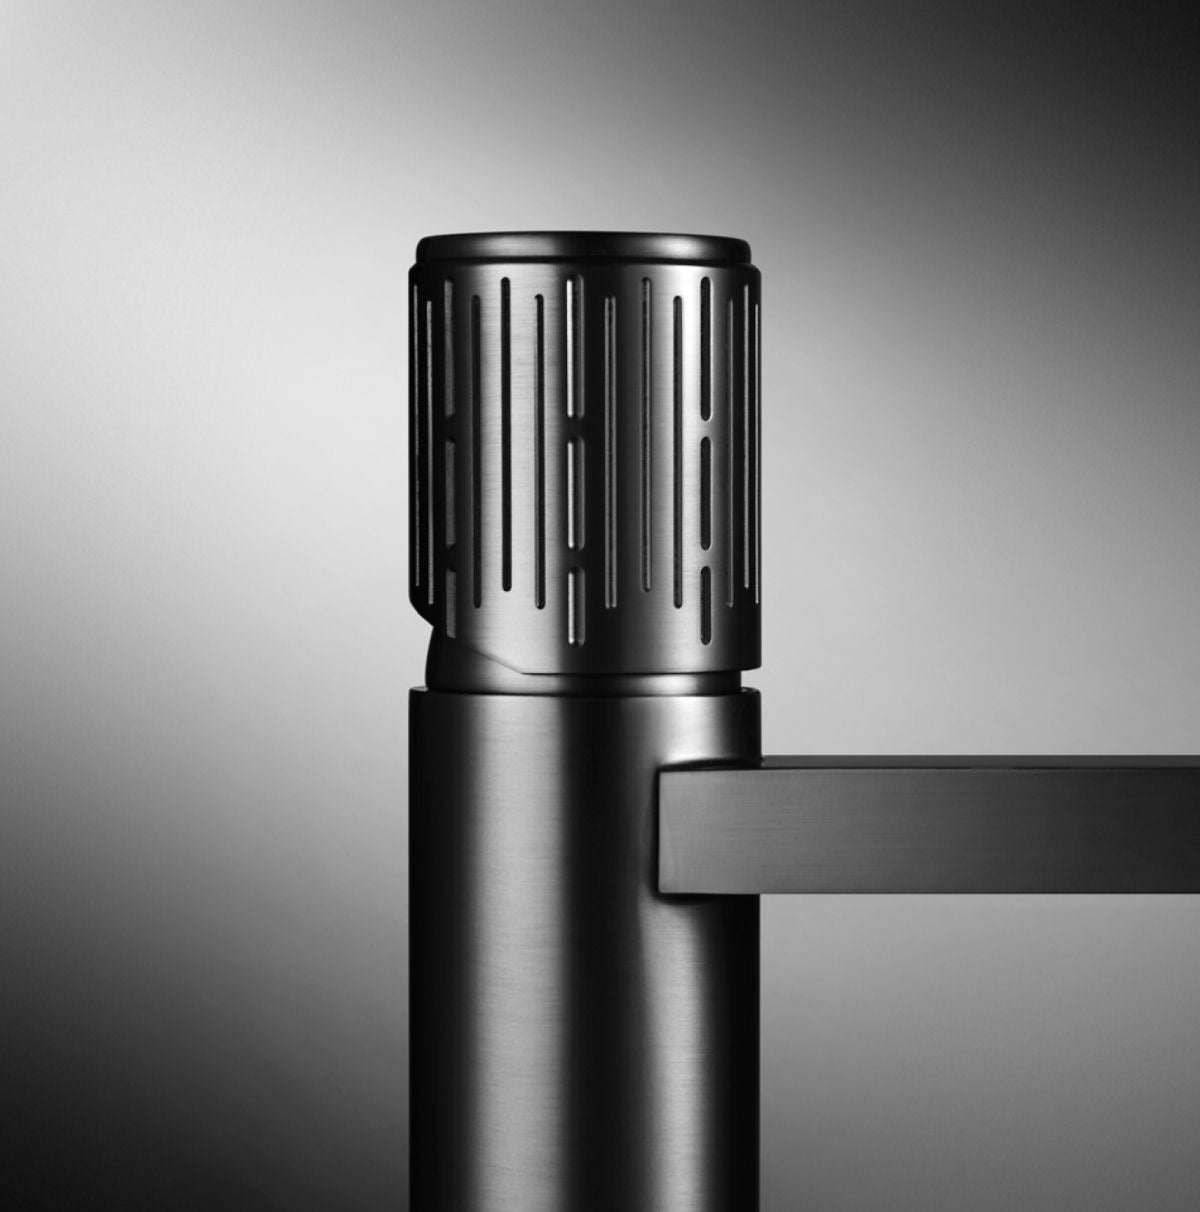 Gun Metal Vessel Sink Basin Faucet - |VESIMI Design| Luxury and Rustic bathrooms online